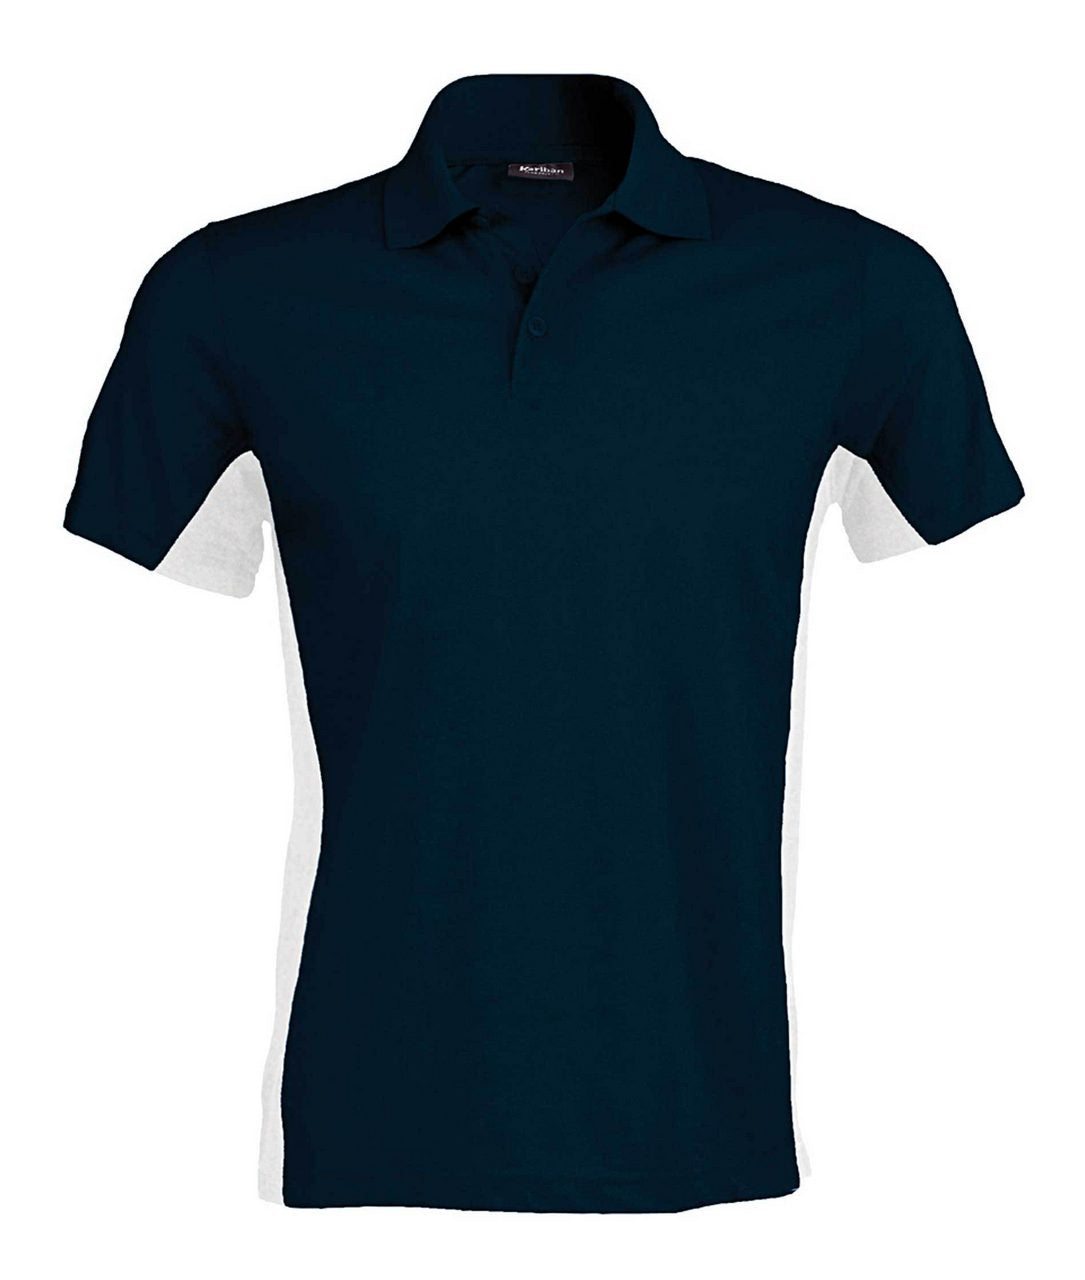 Kariban Herren Polo-Shirt Polohemd Poloshirt Freizeit Sport Polo Shirt